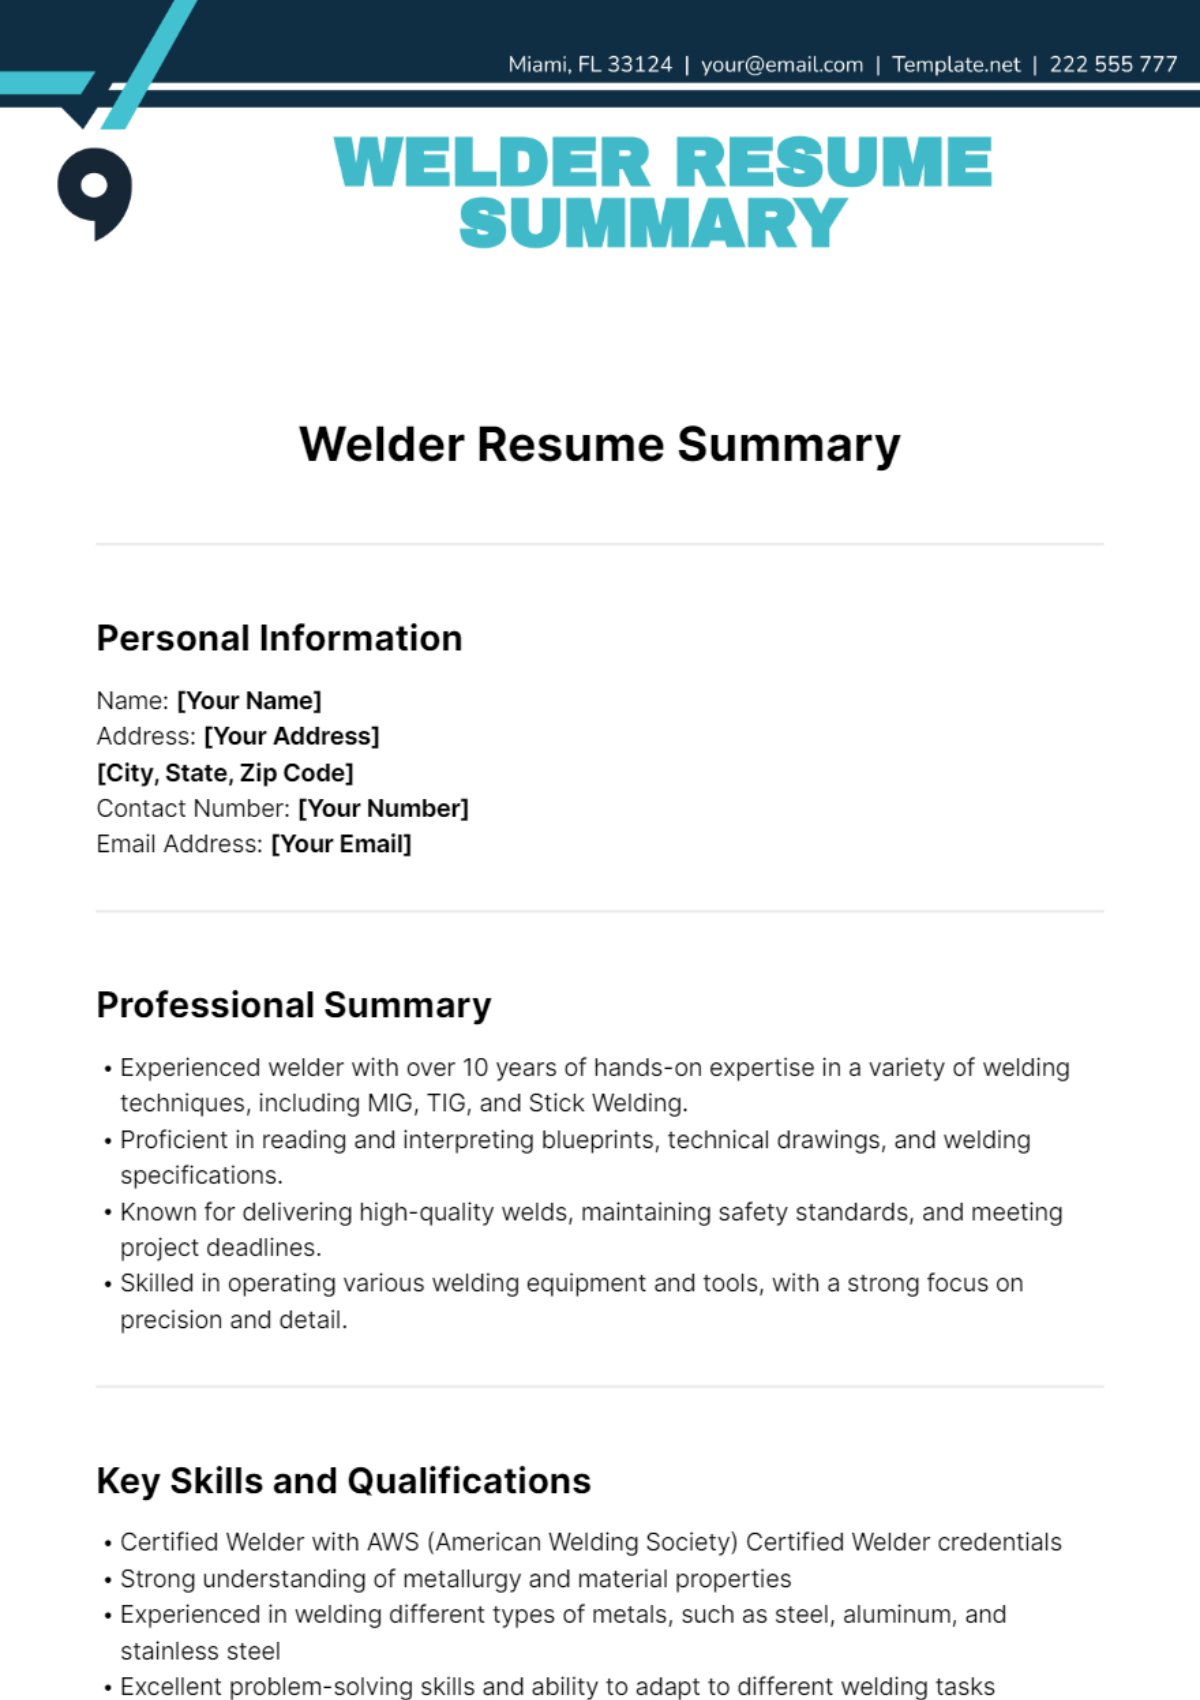 Free Welder Resume Summary Template